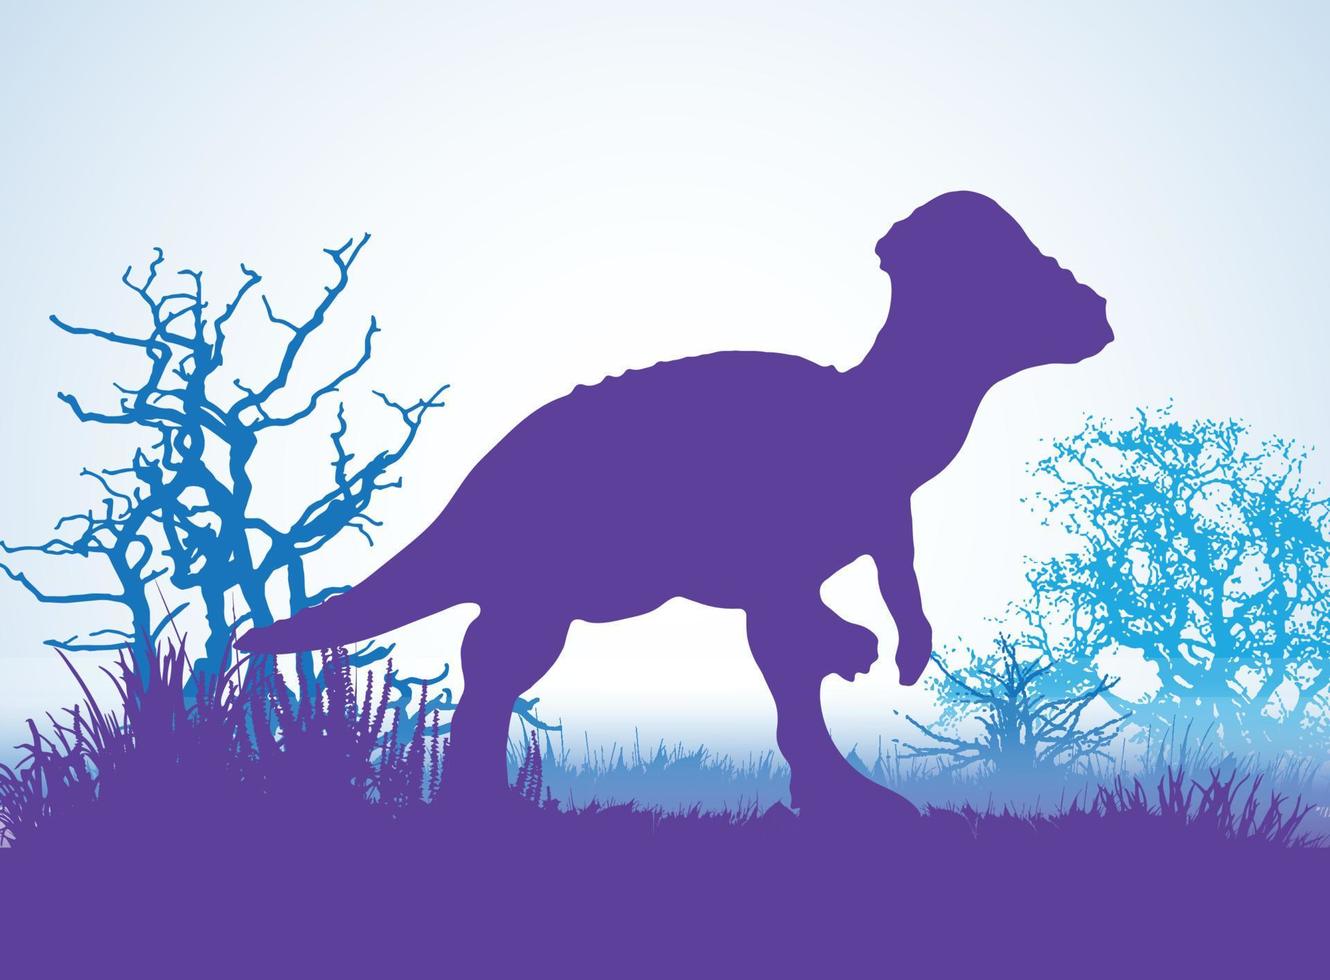 siluetas de dinosaurios pachycephalosaurus en un entorno prehistórico capas superpuestas fondo decorativo banner ilustración vectorial abstracta vector